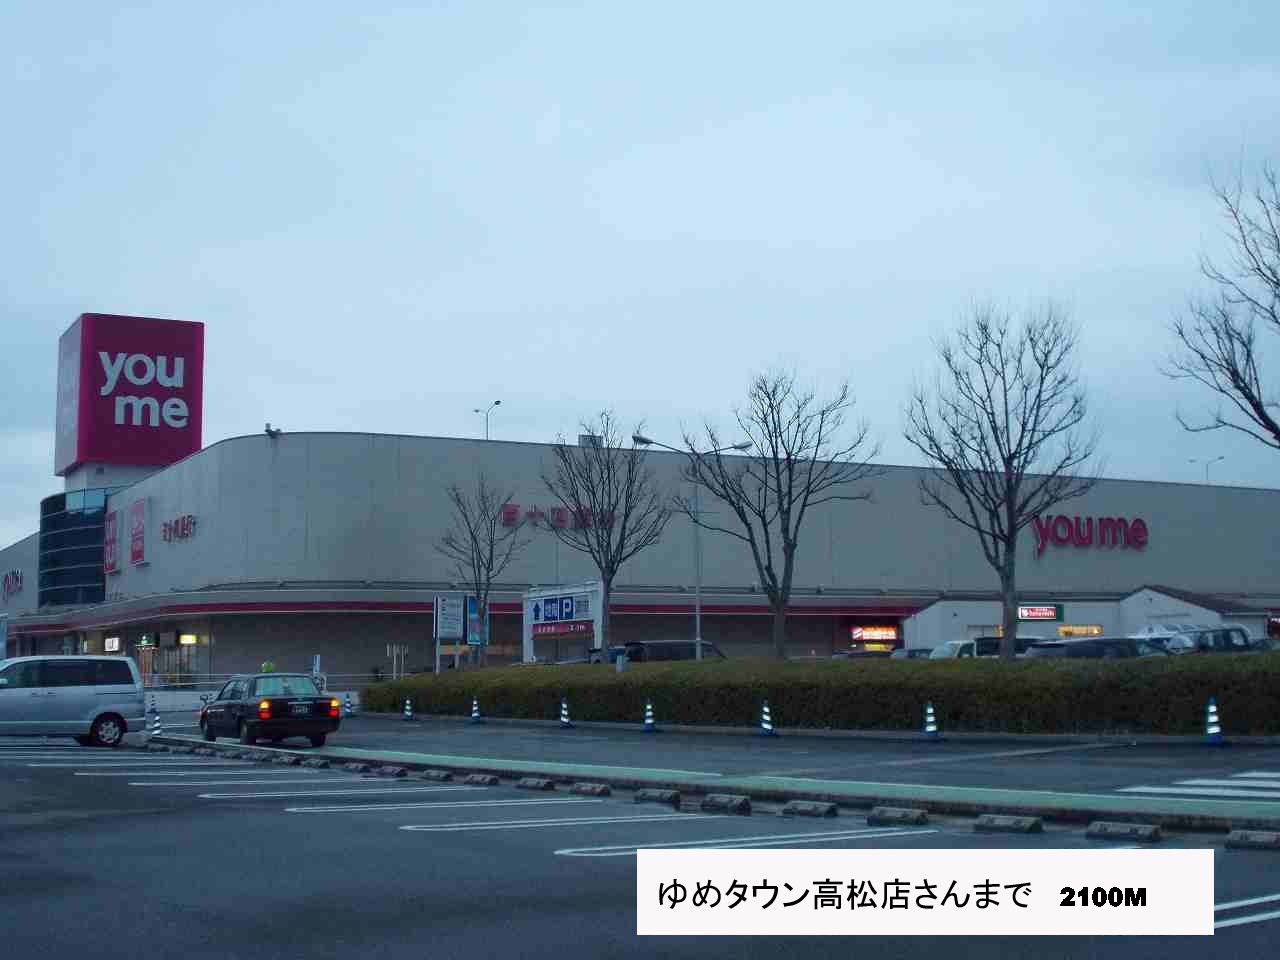 Shopping centre. Yumetaun Takamatsu shop until the (shopping center) 2100m